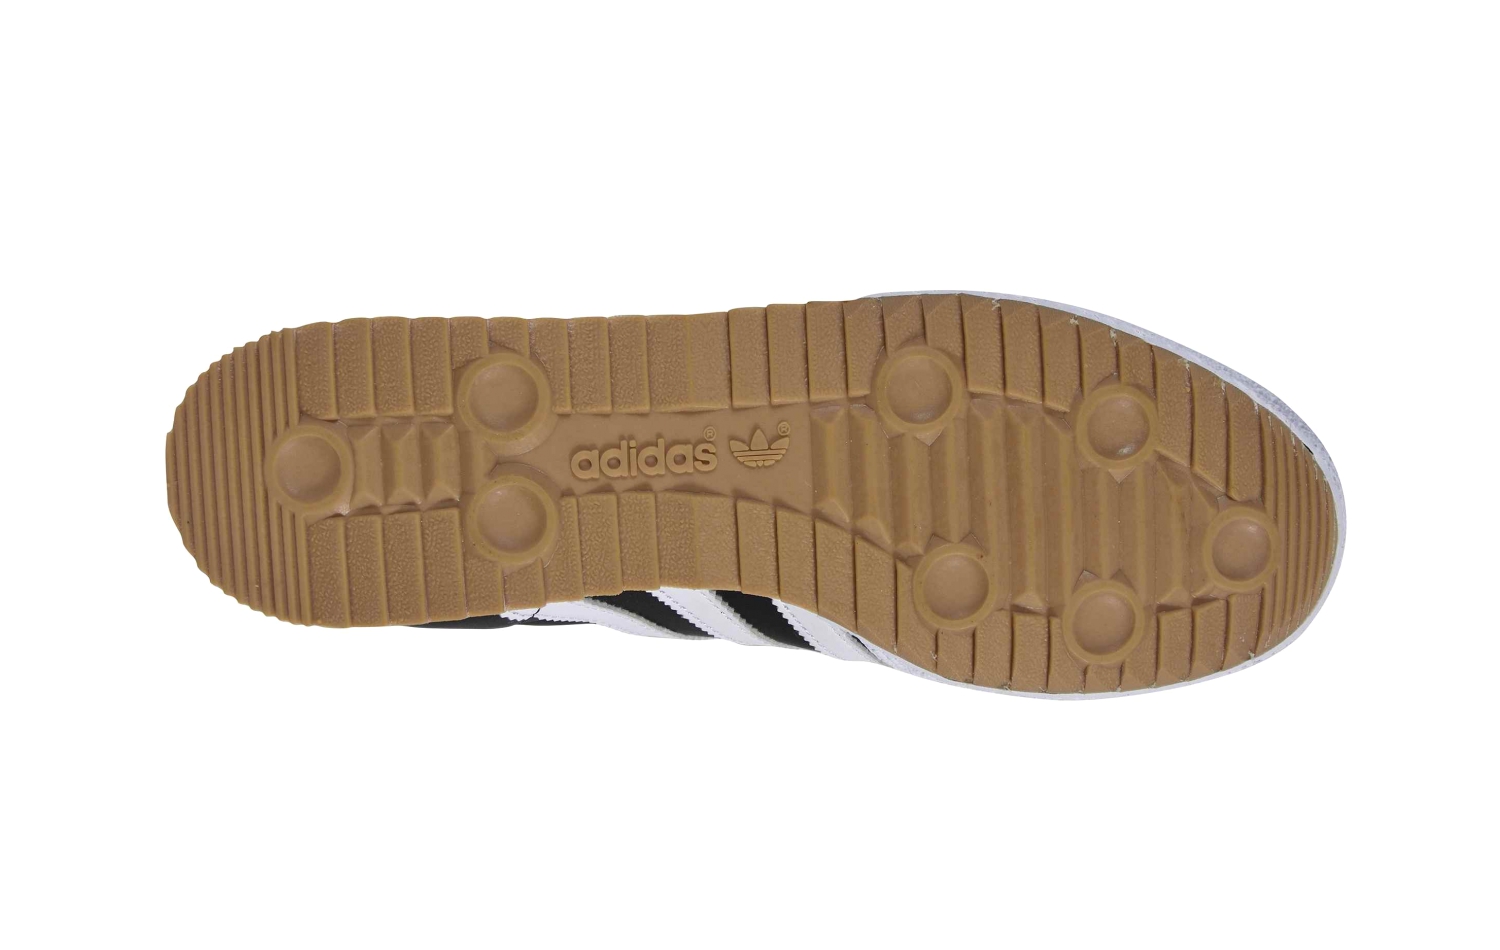 Adidas Samba Super, Black/White férfi cipő eladó, ár | Garage Store Webshop